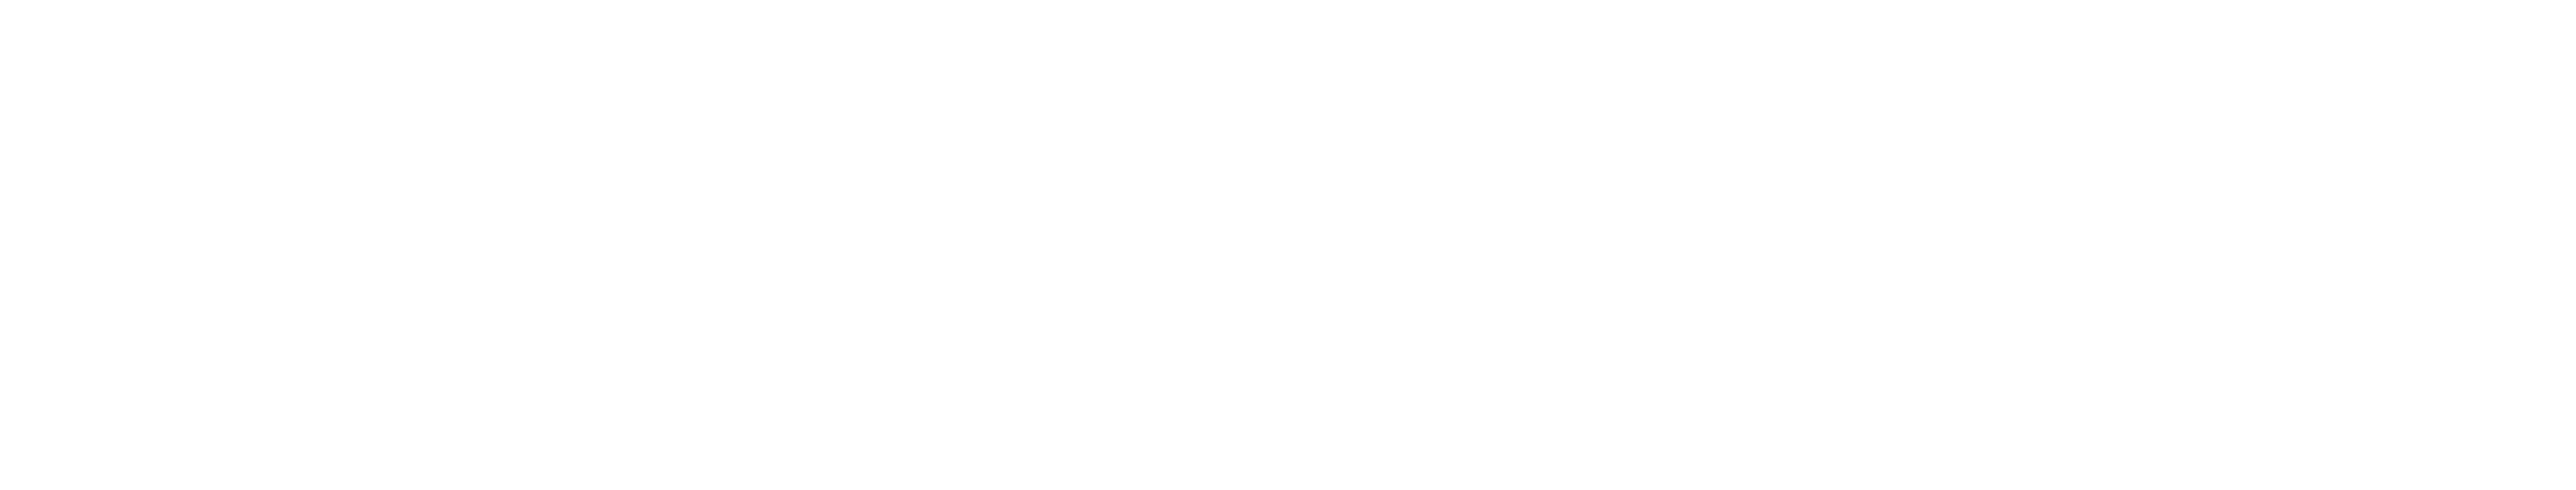 NYC Marthon Logo